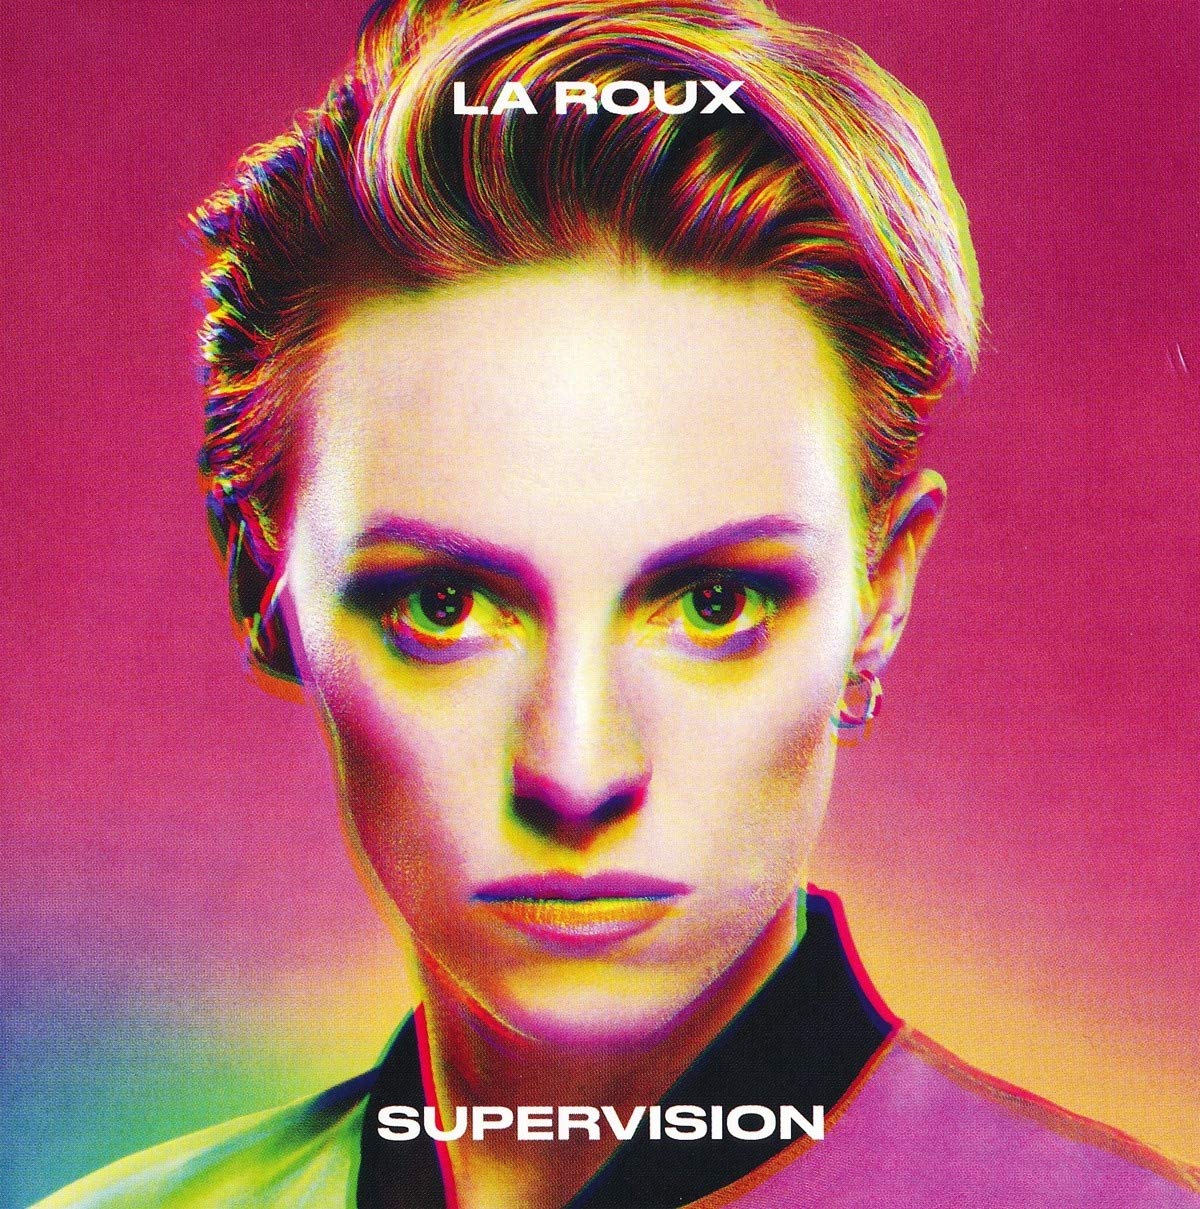 La Roux- Supervision - Darkside Records